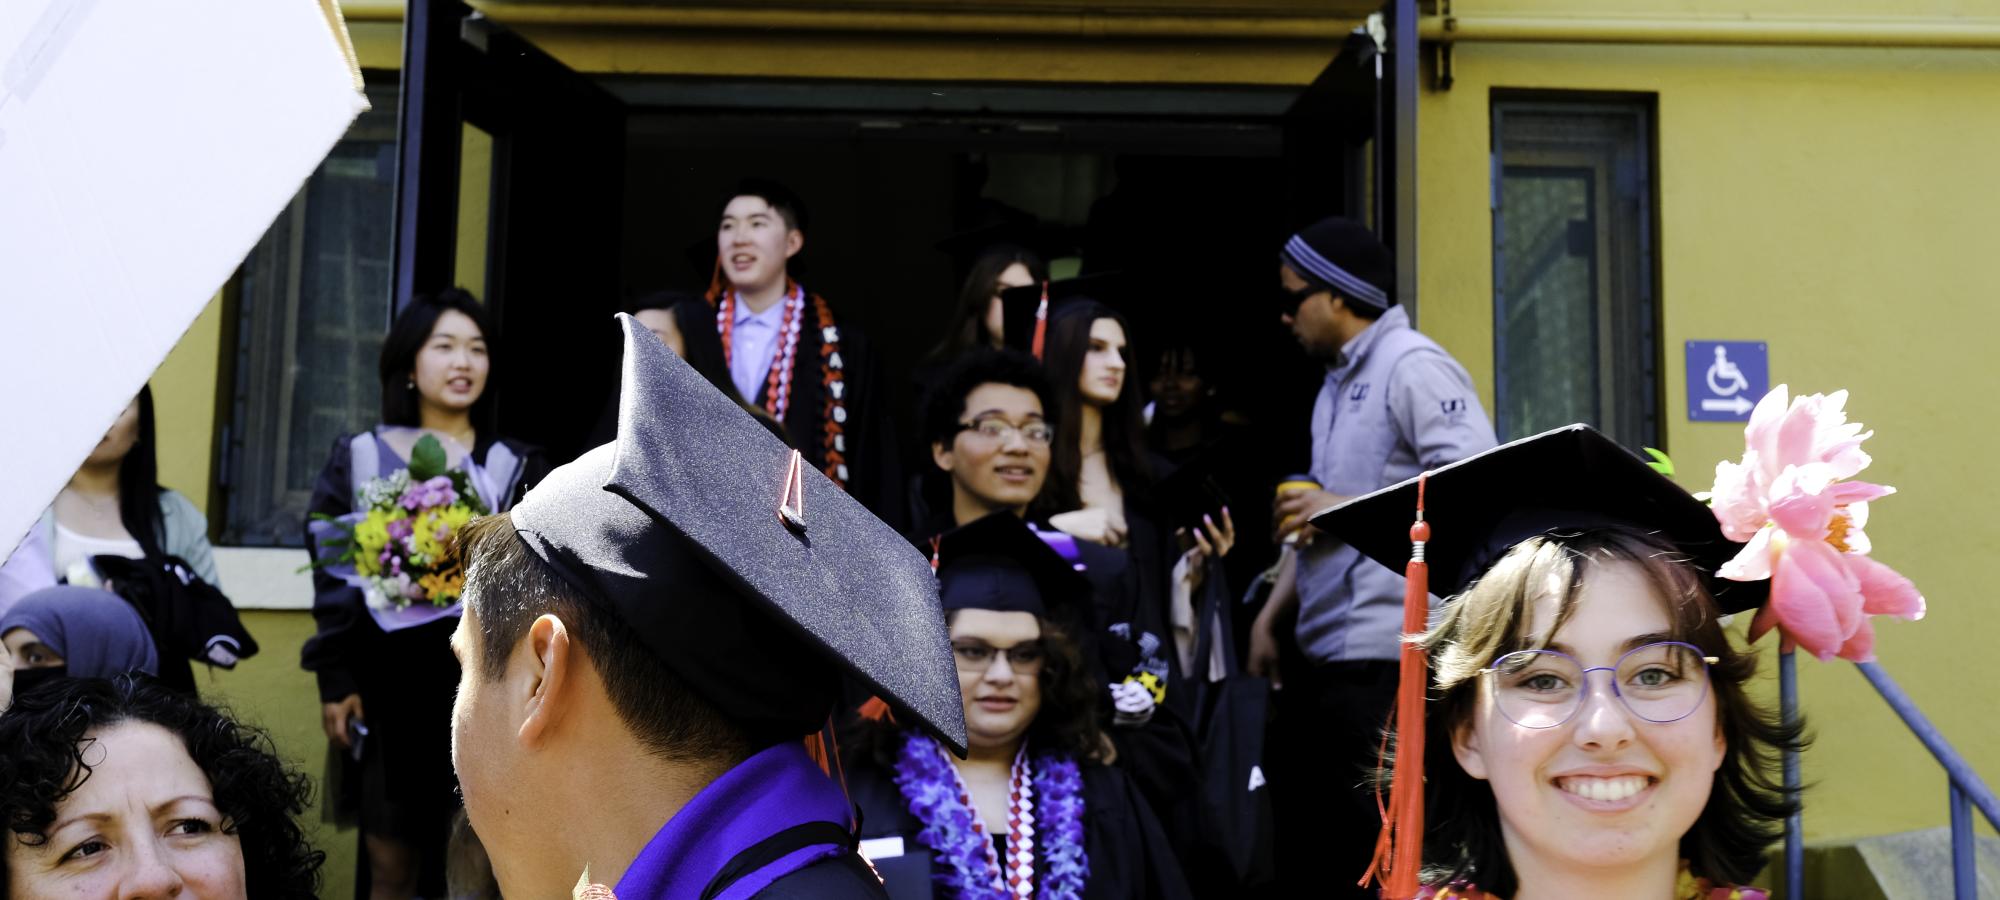 graduates exiting the ceremony